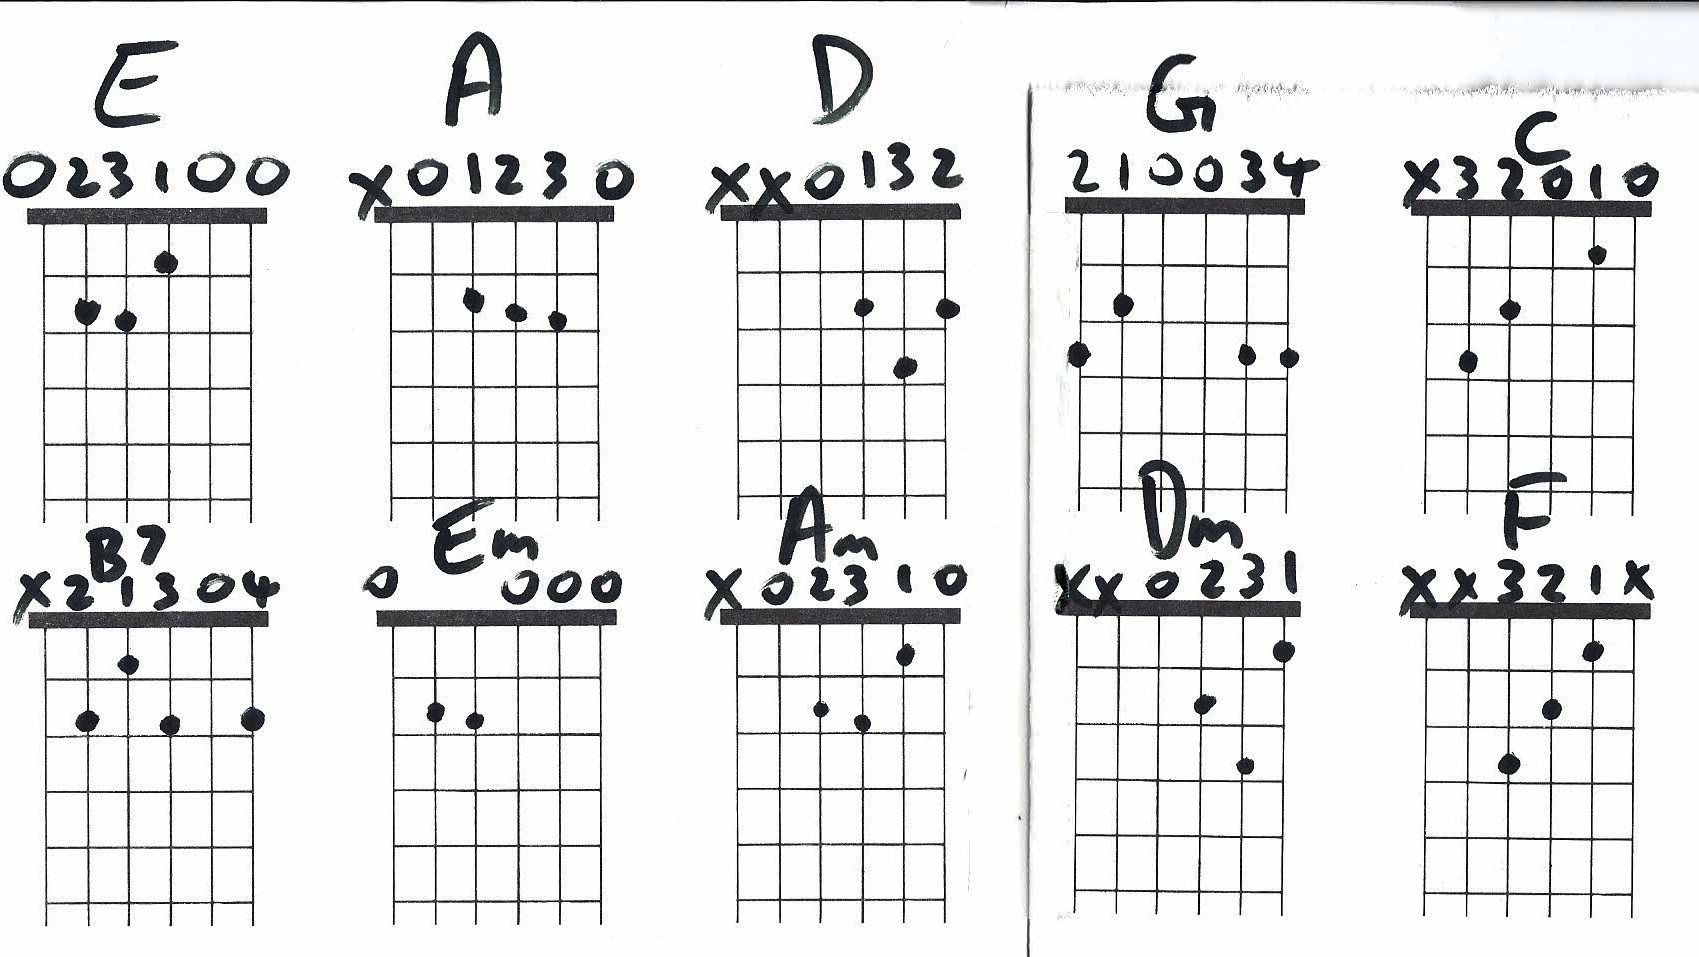 Аккорд с на гитаре схема. Аккорды на гитаре 6 струн. Аккорды для гитары для начинающих 6 струн. Аккорды на 6 струнной гитаре. Схемы аккордов 6 струнной гитары.